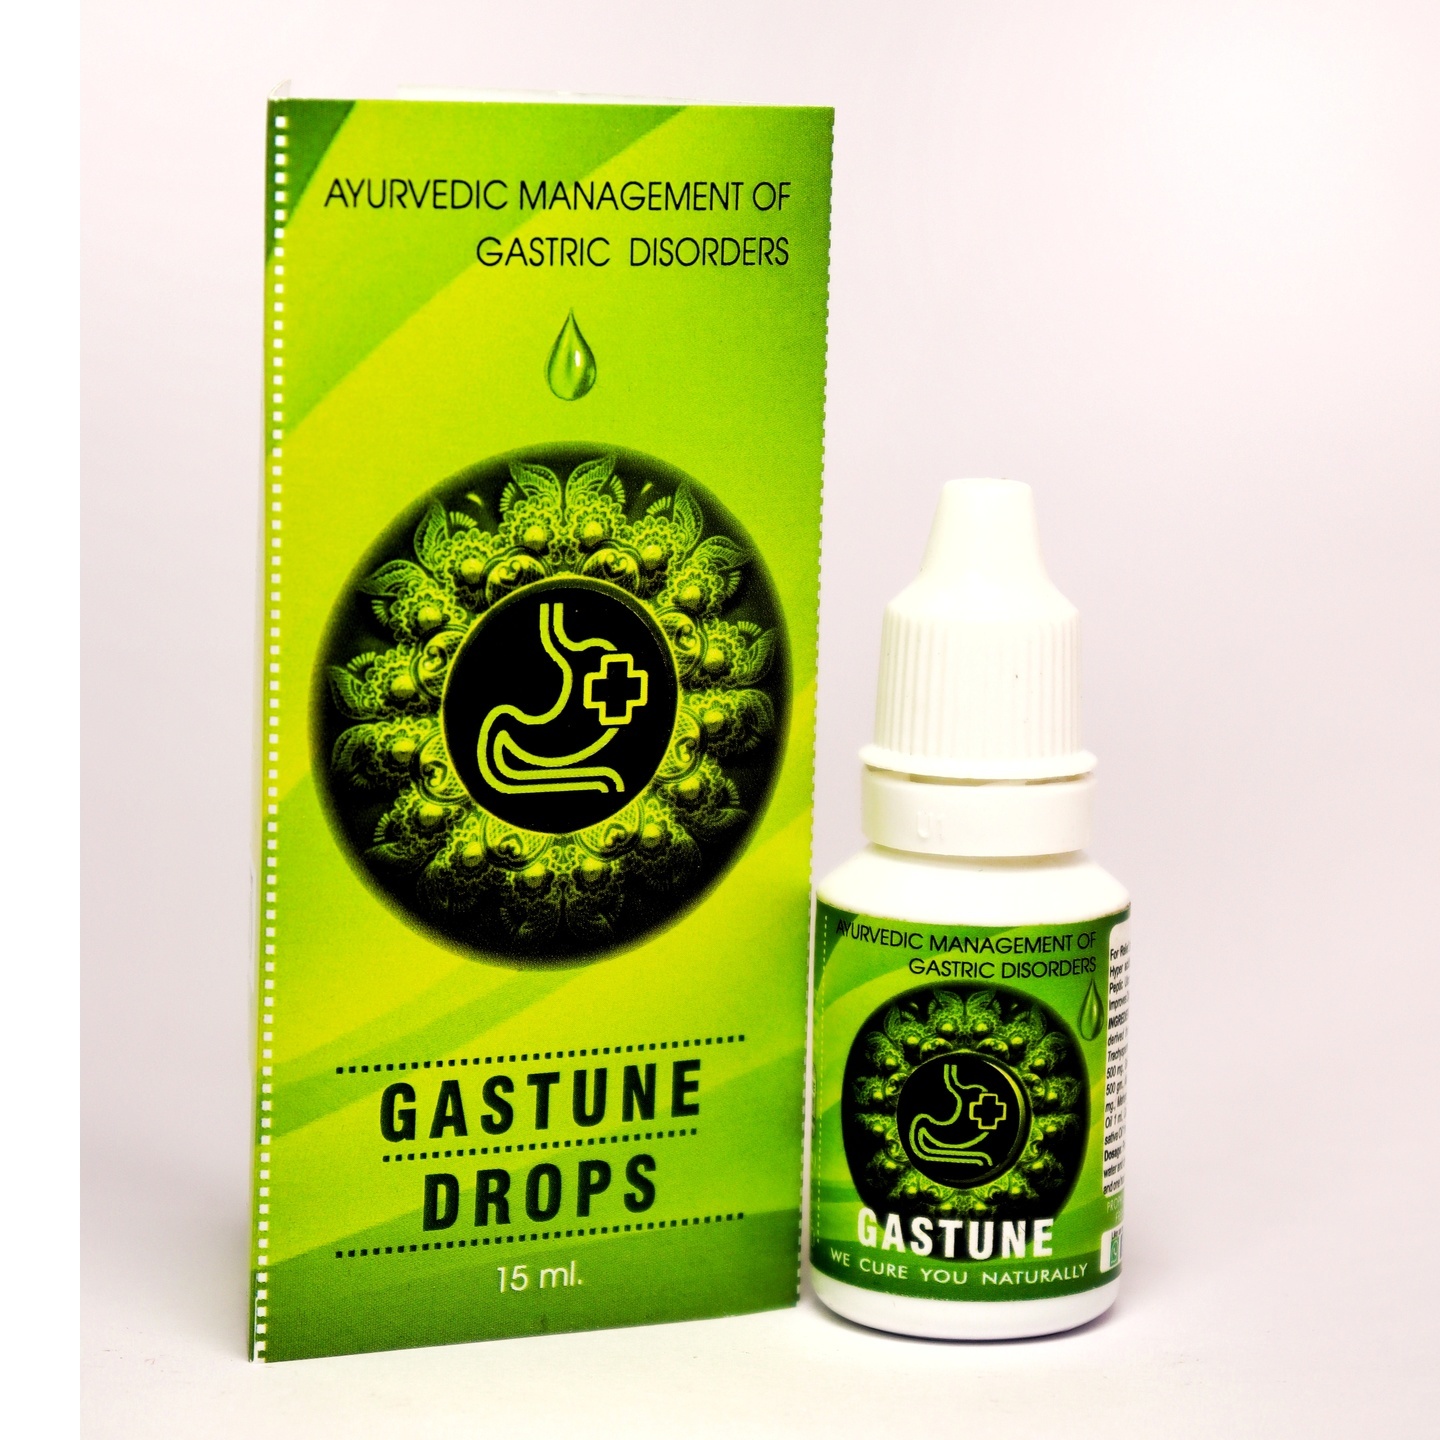 Gastune Drops 15 ml.